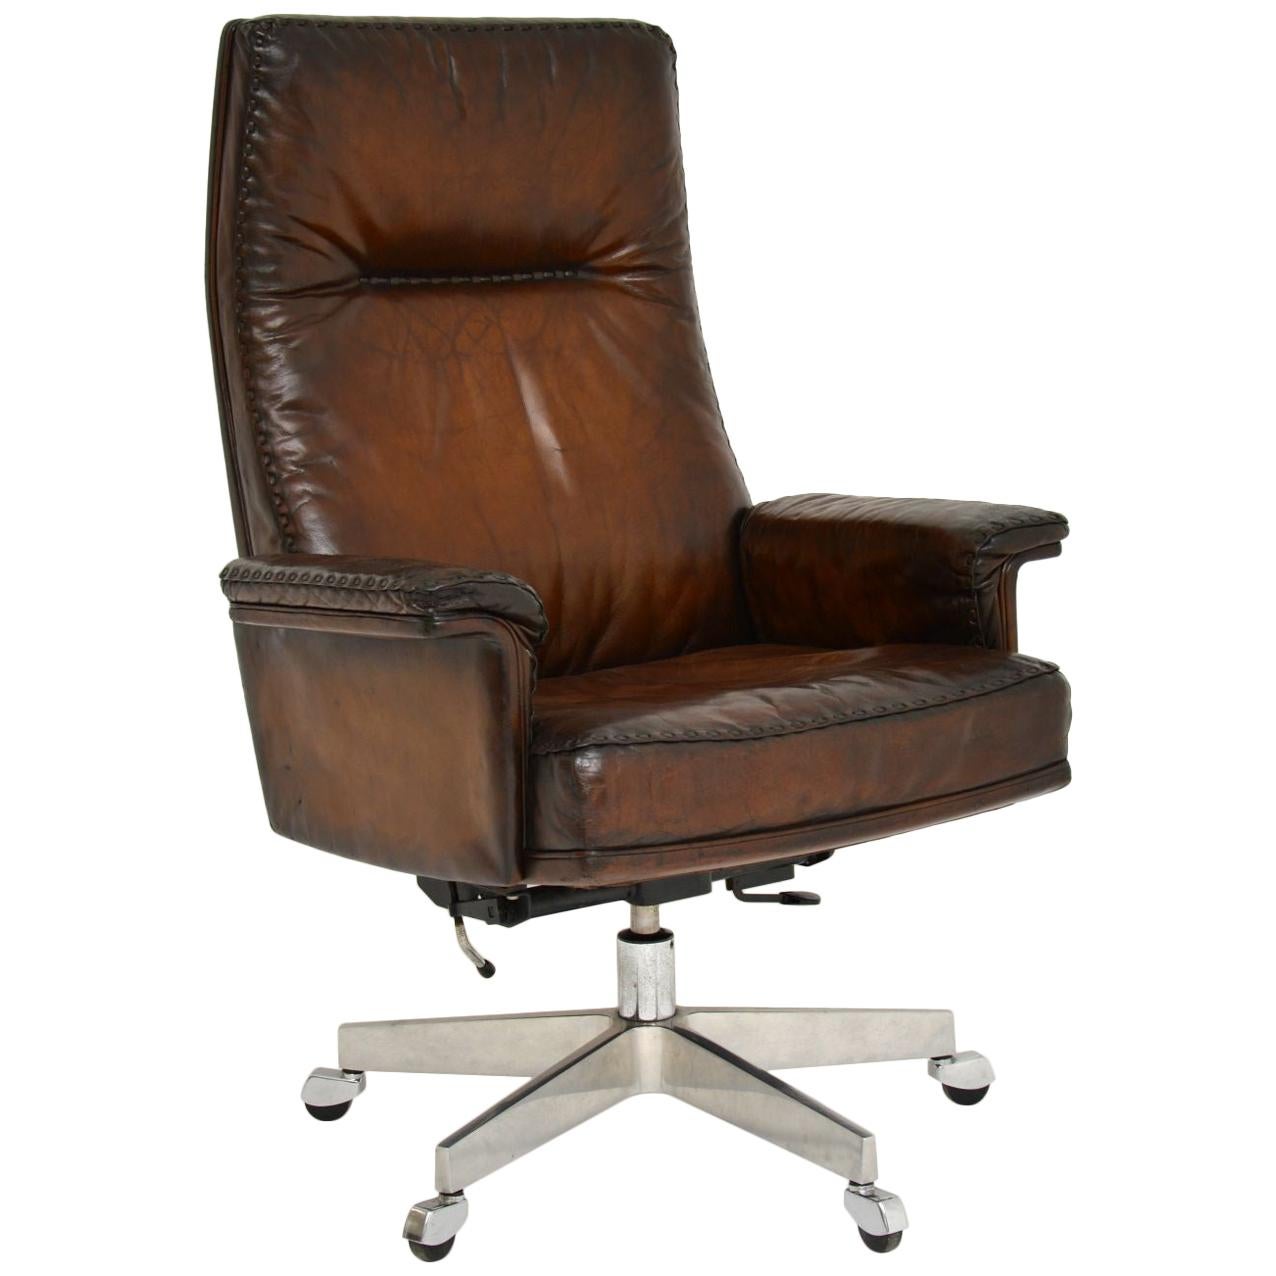 1960s Vintage Leather Swivel Desk Chair by De Sede